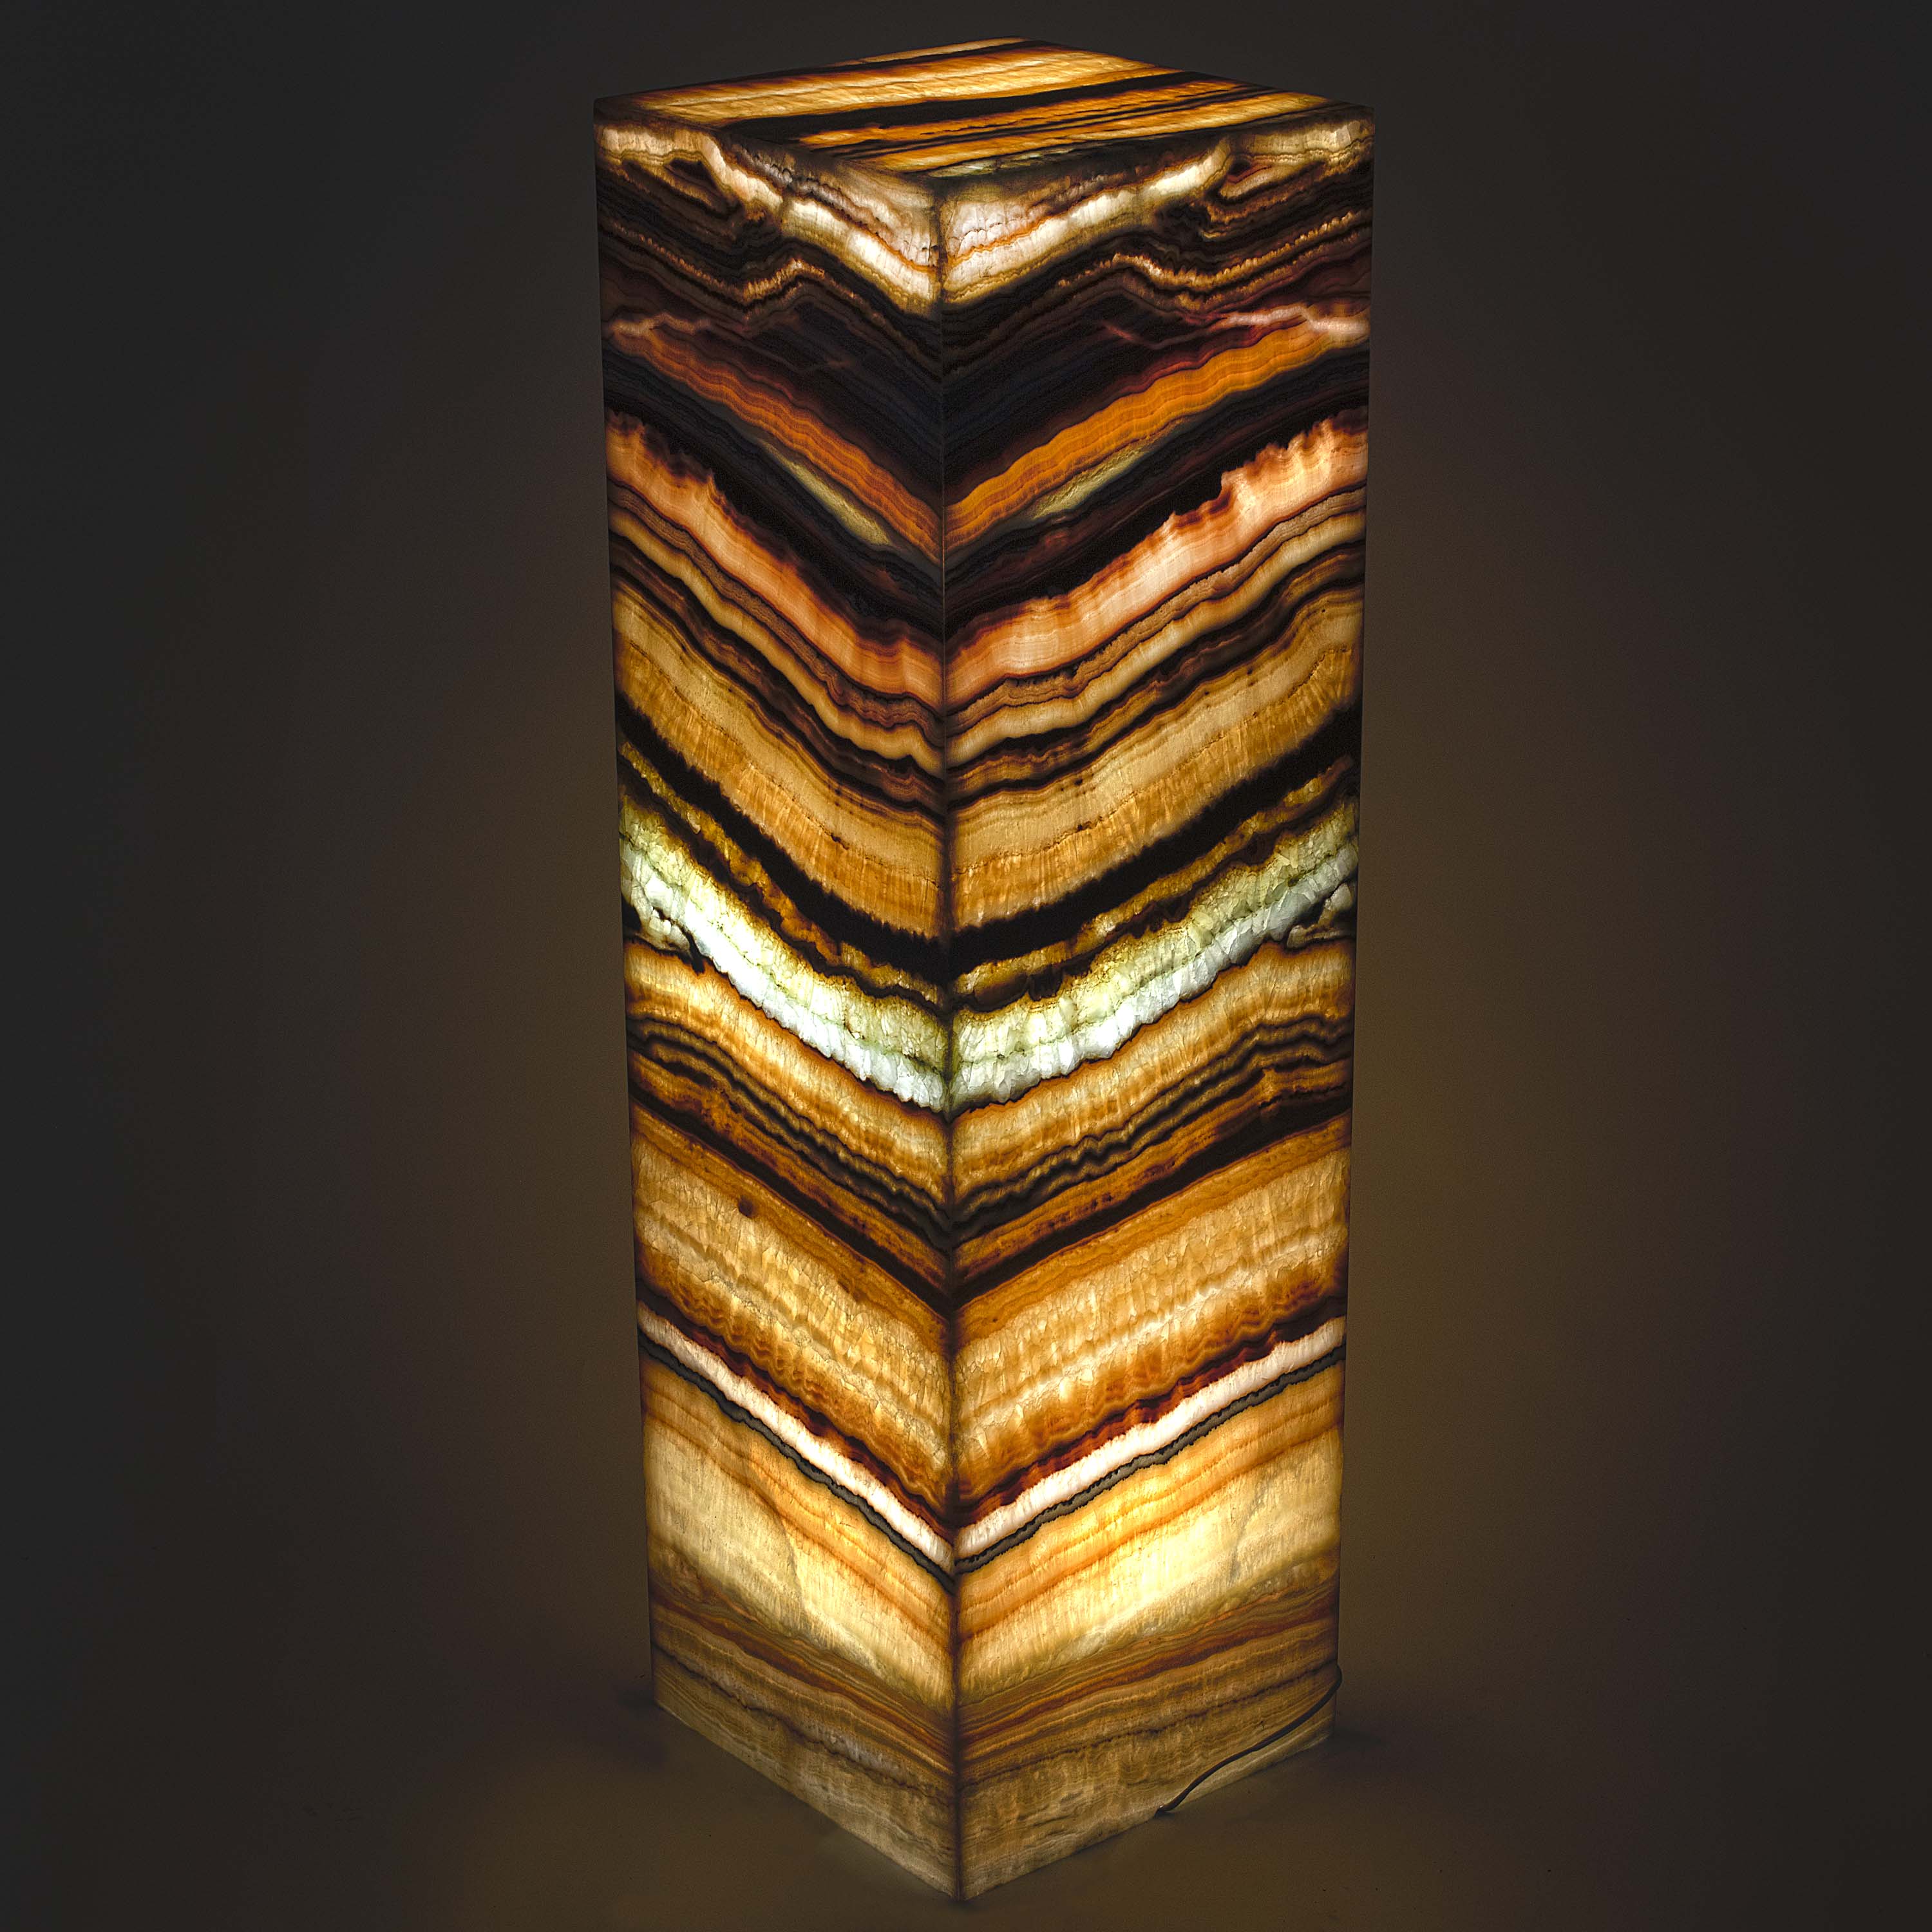 Kalifano Light Towers Natural Multi Aqua Onyx Lamp Light Tower from Mexico - 40" tall LT10030-AQ.001